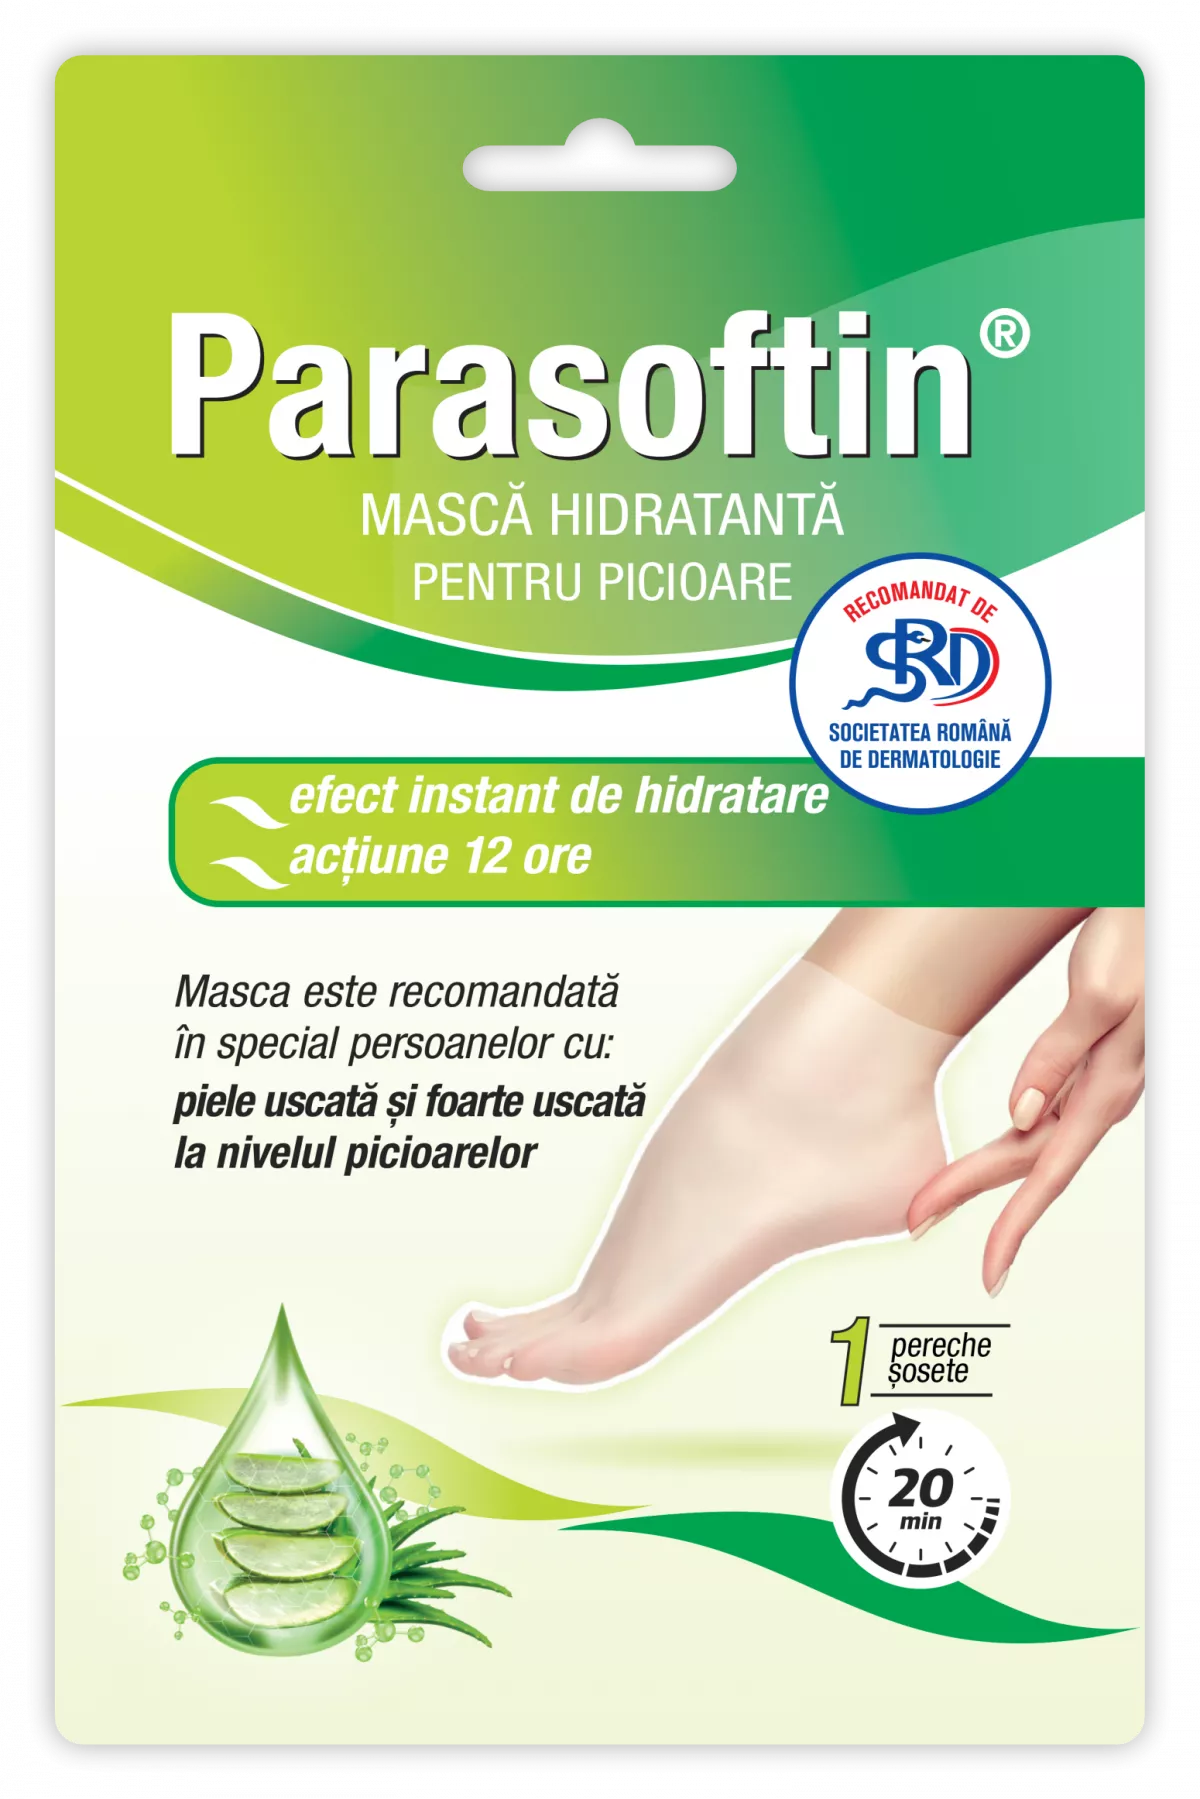 Masca hidratanta pentru picioare Parasoftin, 1 pereche, Zdrovit, [],remediumfarm.ro